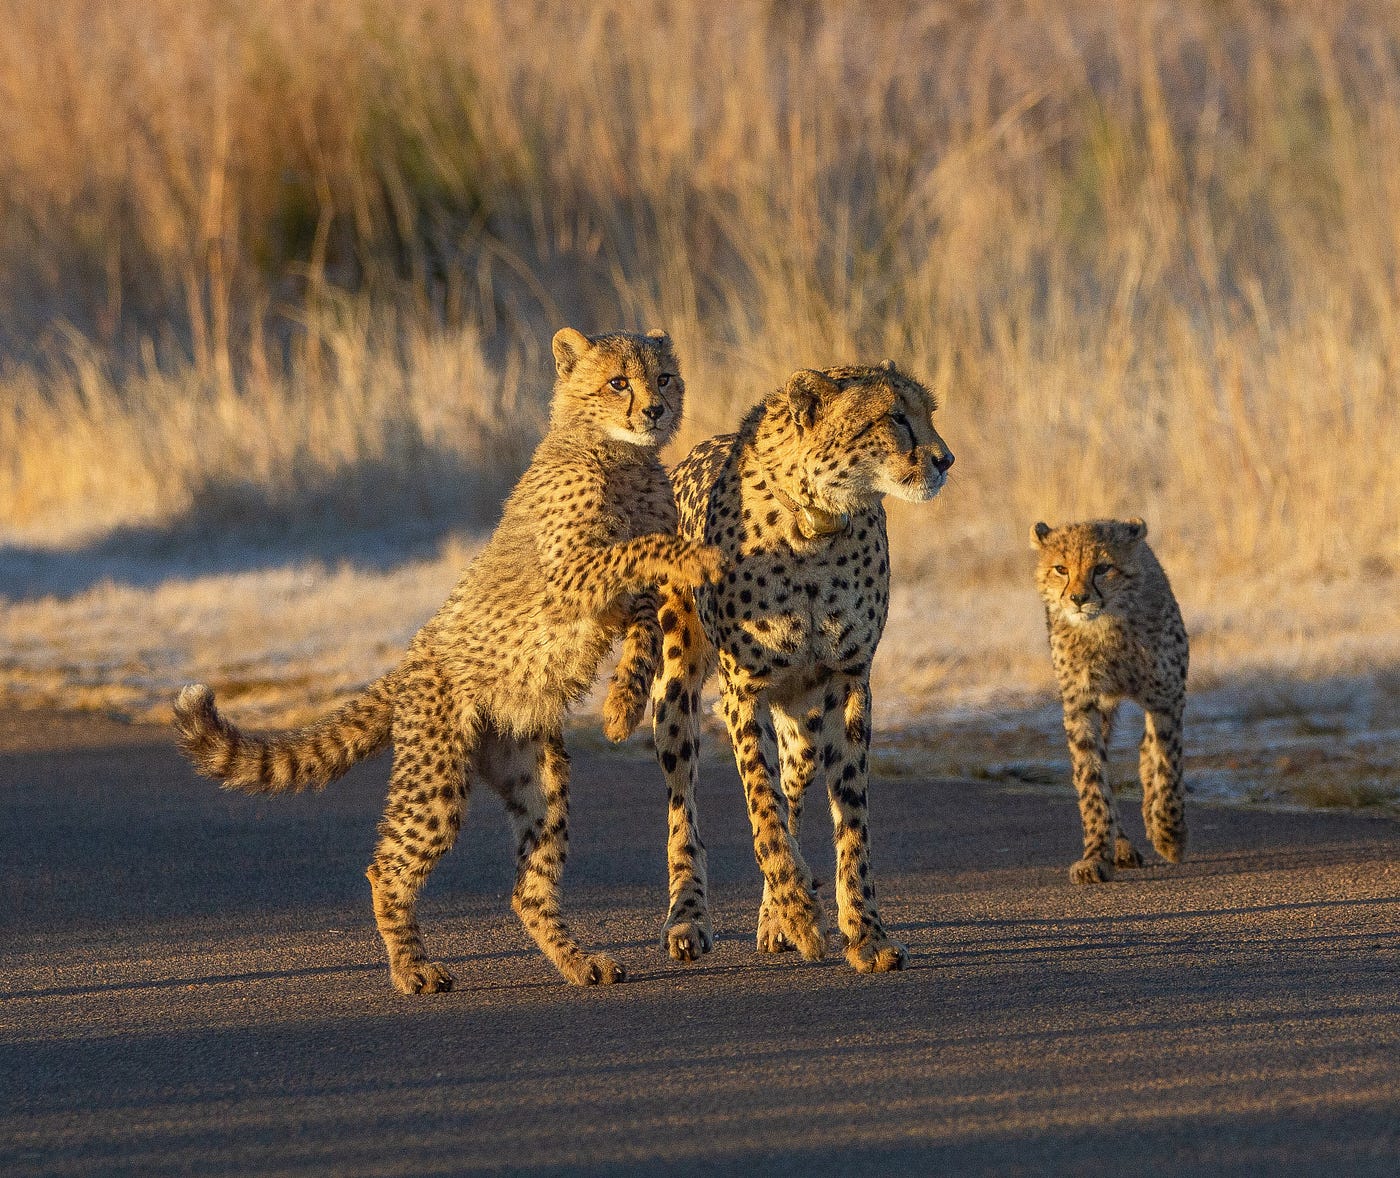 Spotless Cheetah: An Inspiring Story of A Cheetah Cub Learning to